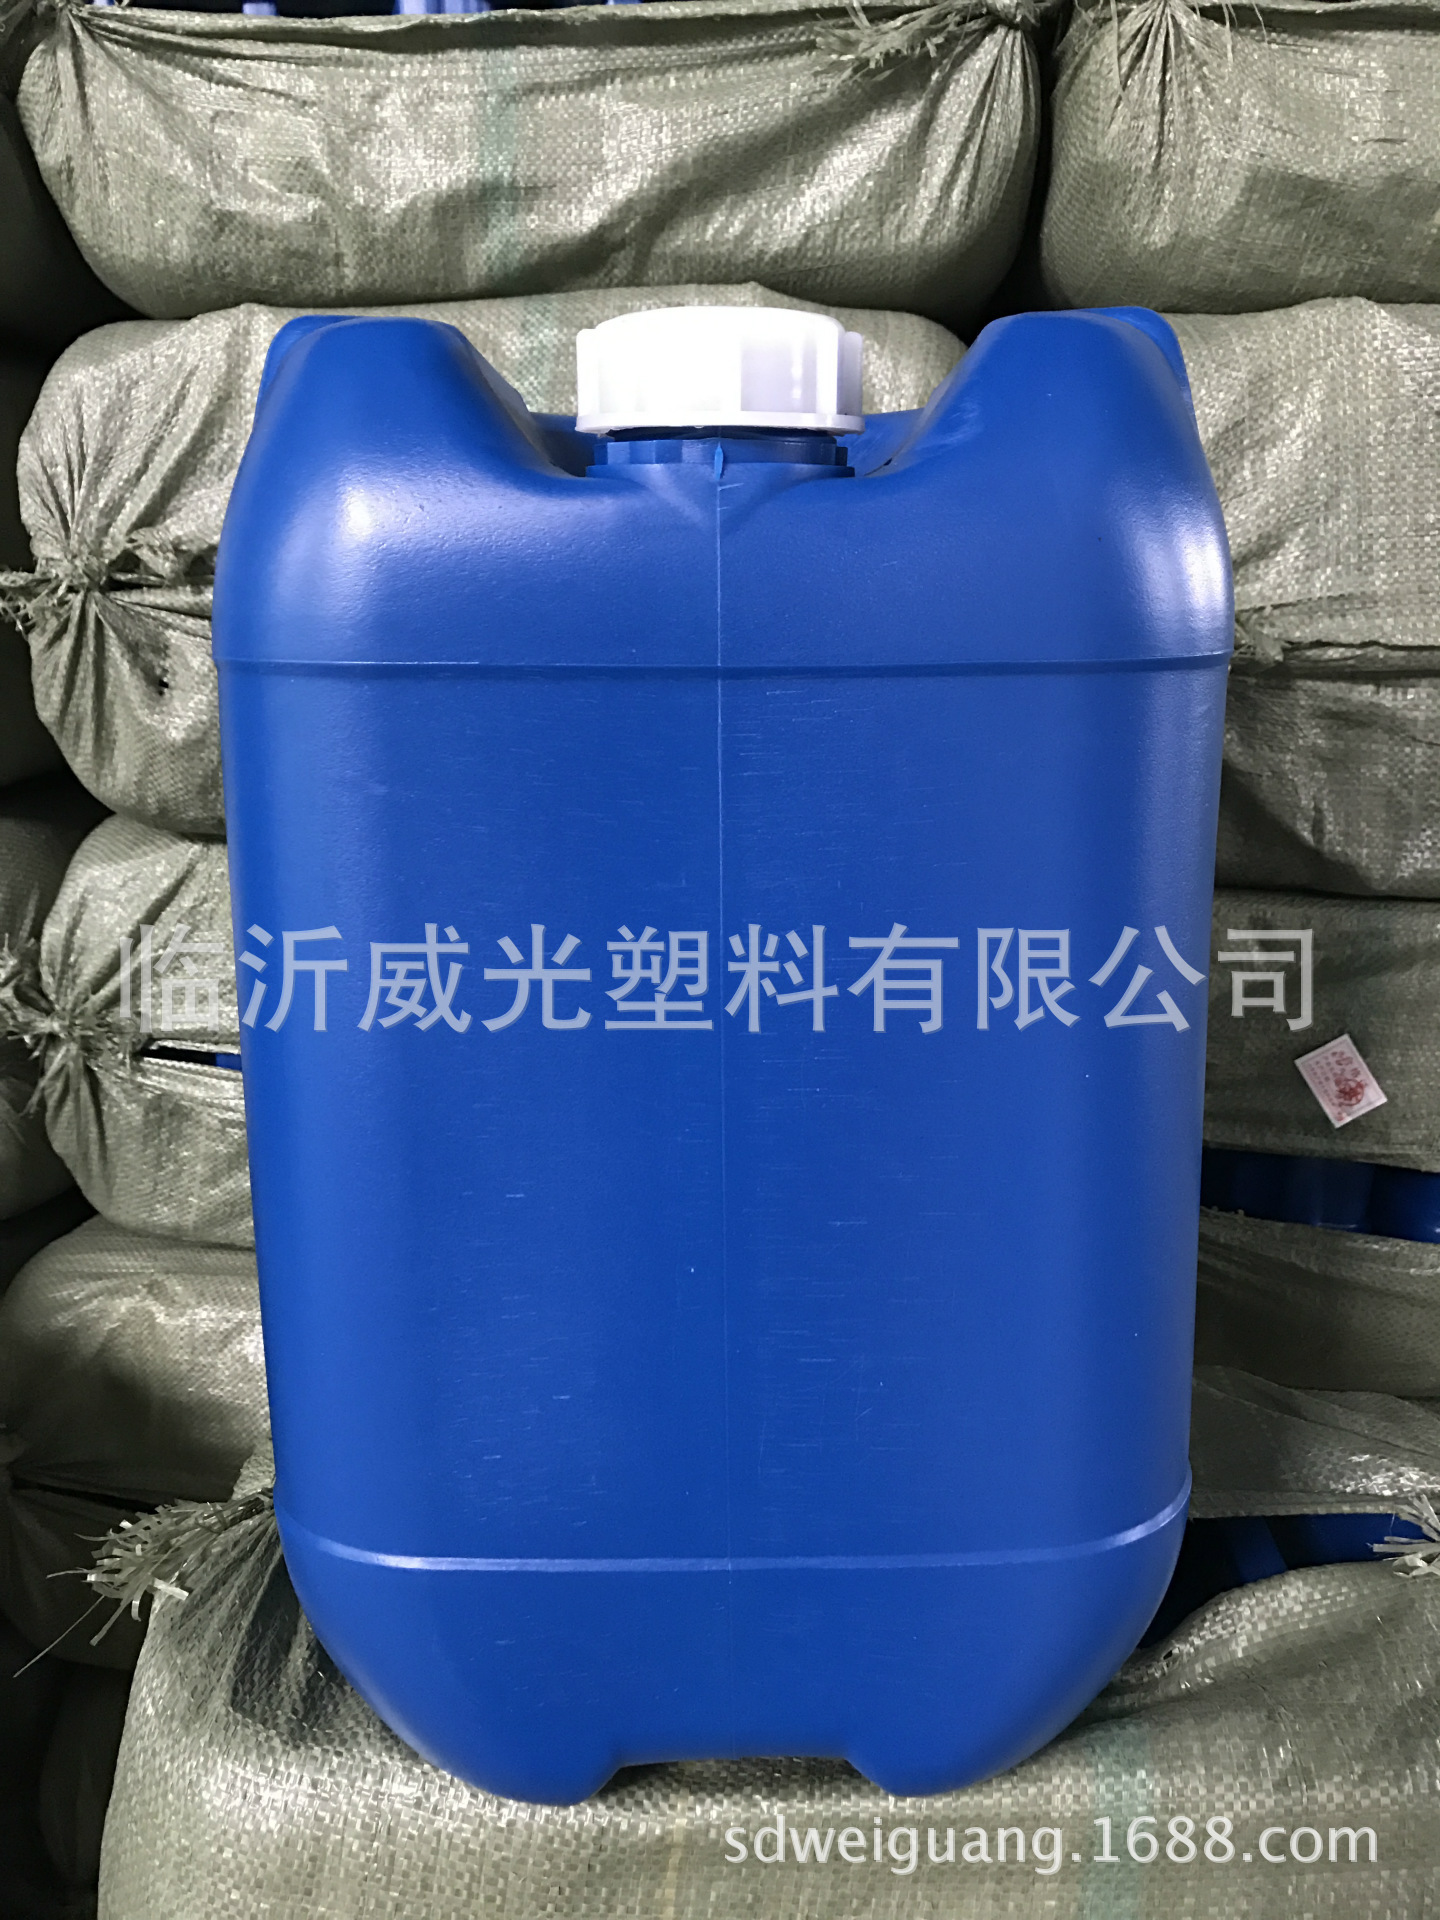 25L 蓝色化工液体桶 抗摔高韧性塑料桶 防滑塌设计 化工专用桶示例图4